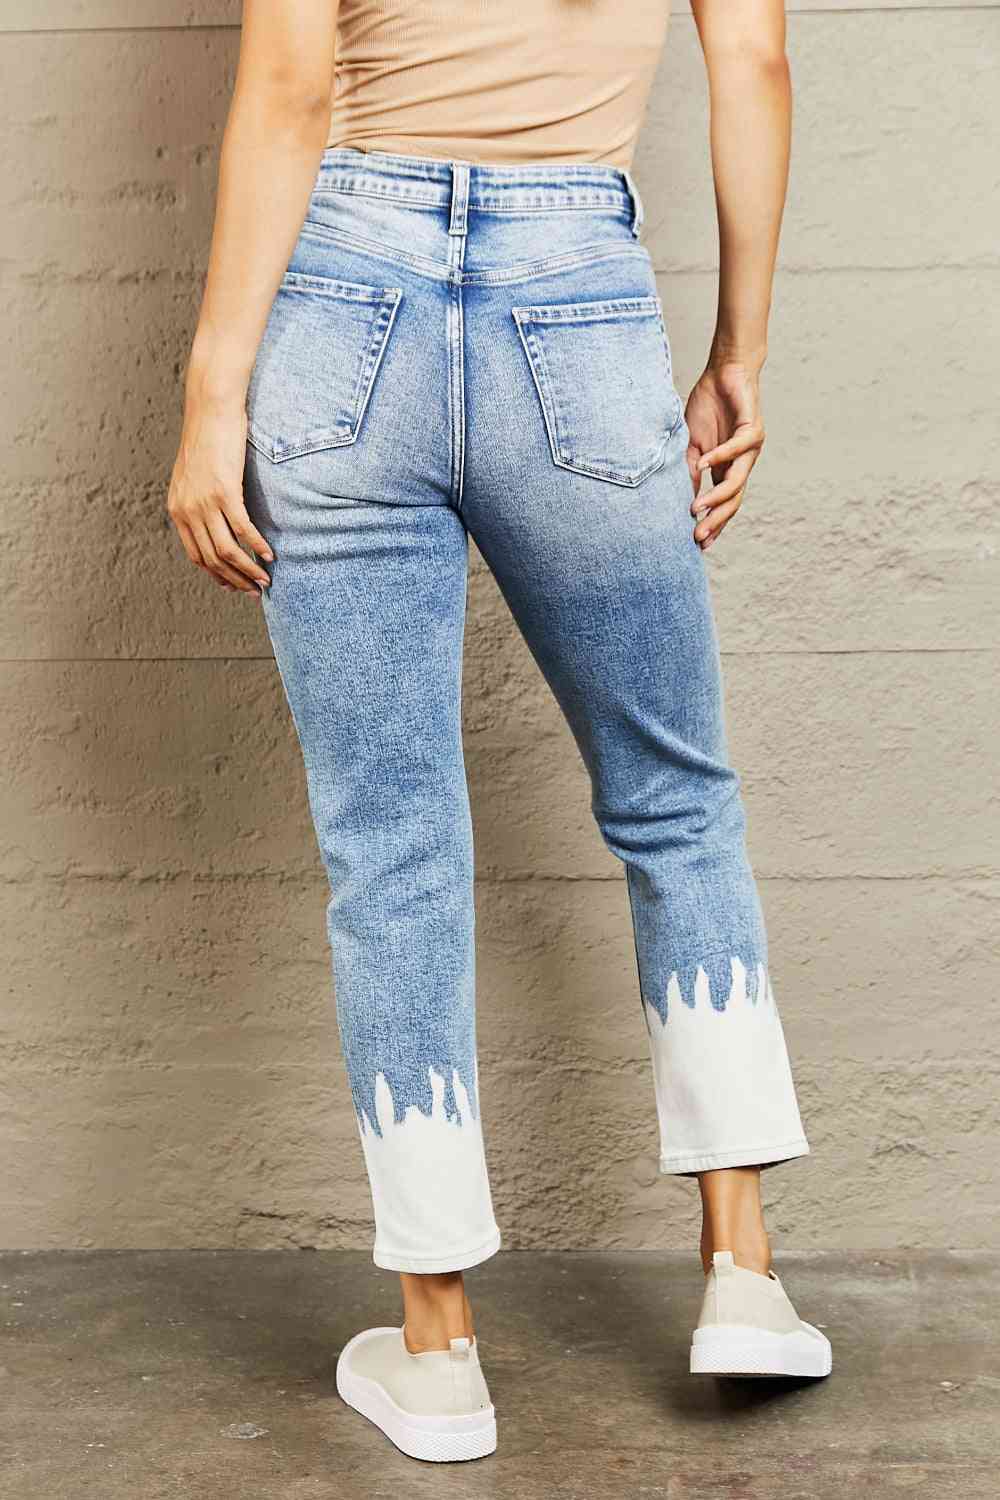 BAYEAS High Waisted Distressed Painted Cropped Skinny Jeans - Pahabu